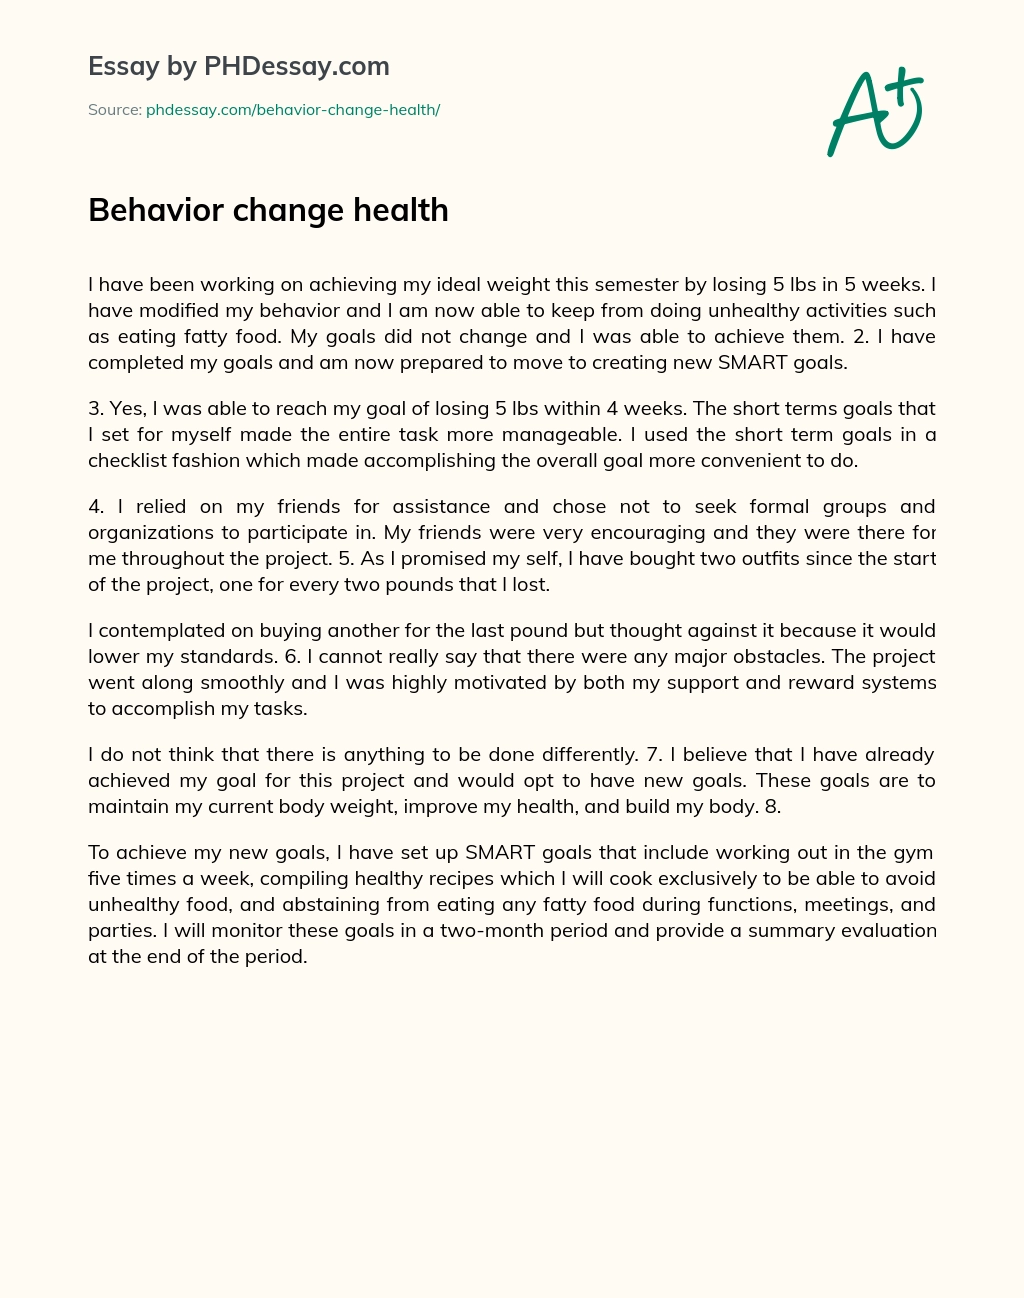 Behavior change health essay